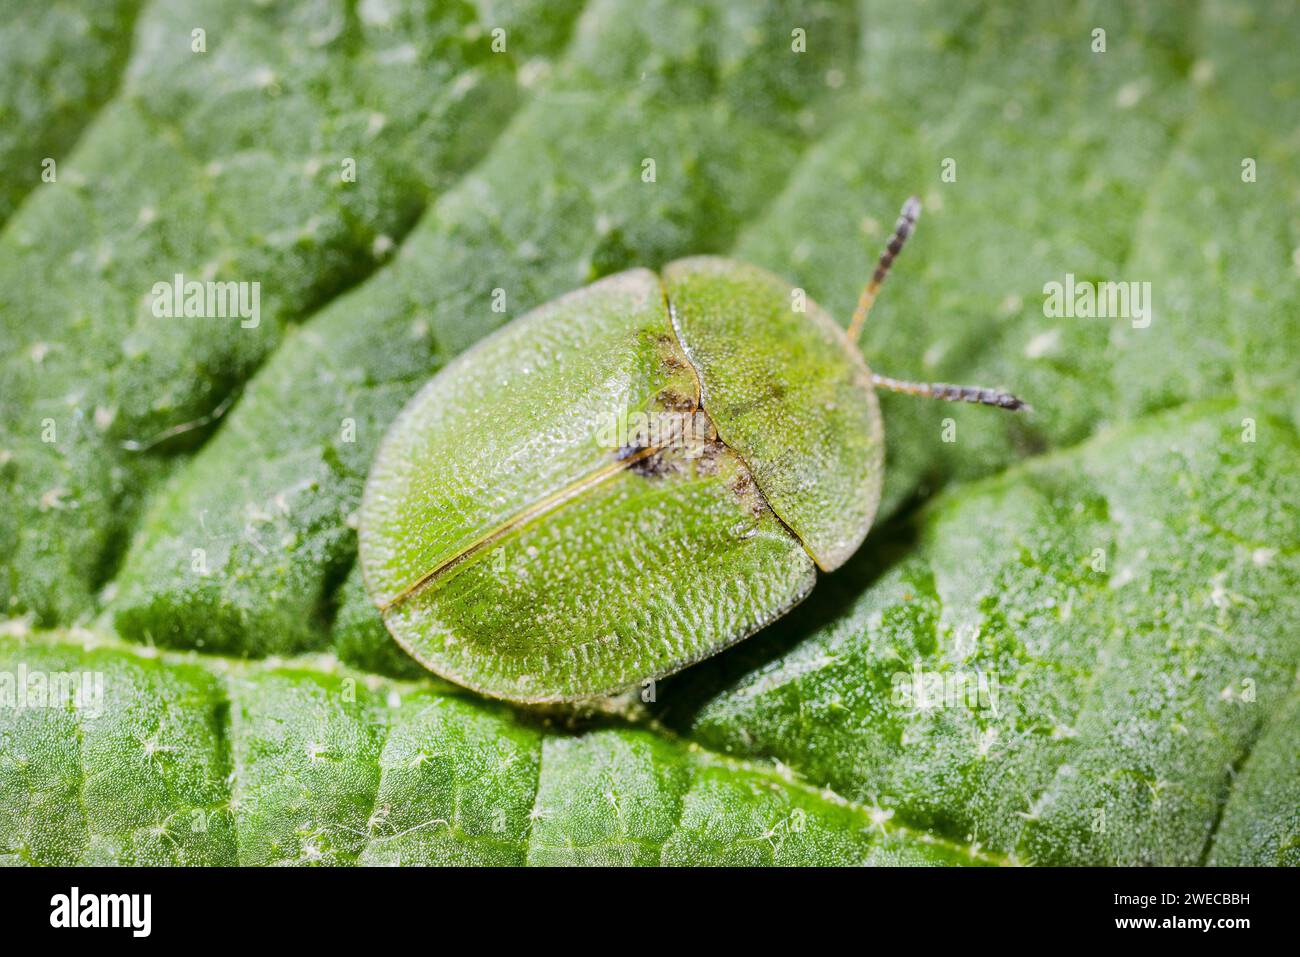 Thistle tortoise beetle (Cassida rubiginosa), sitting on a leaf, top view, Germany Stock Photo